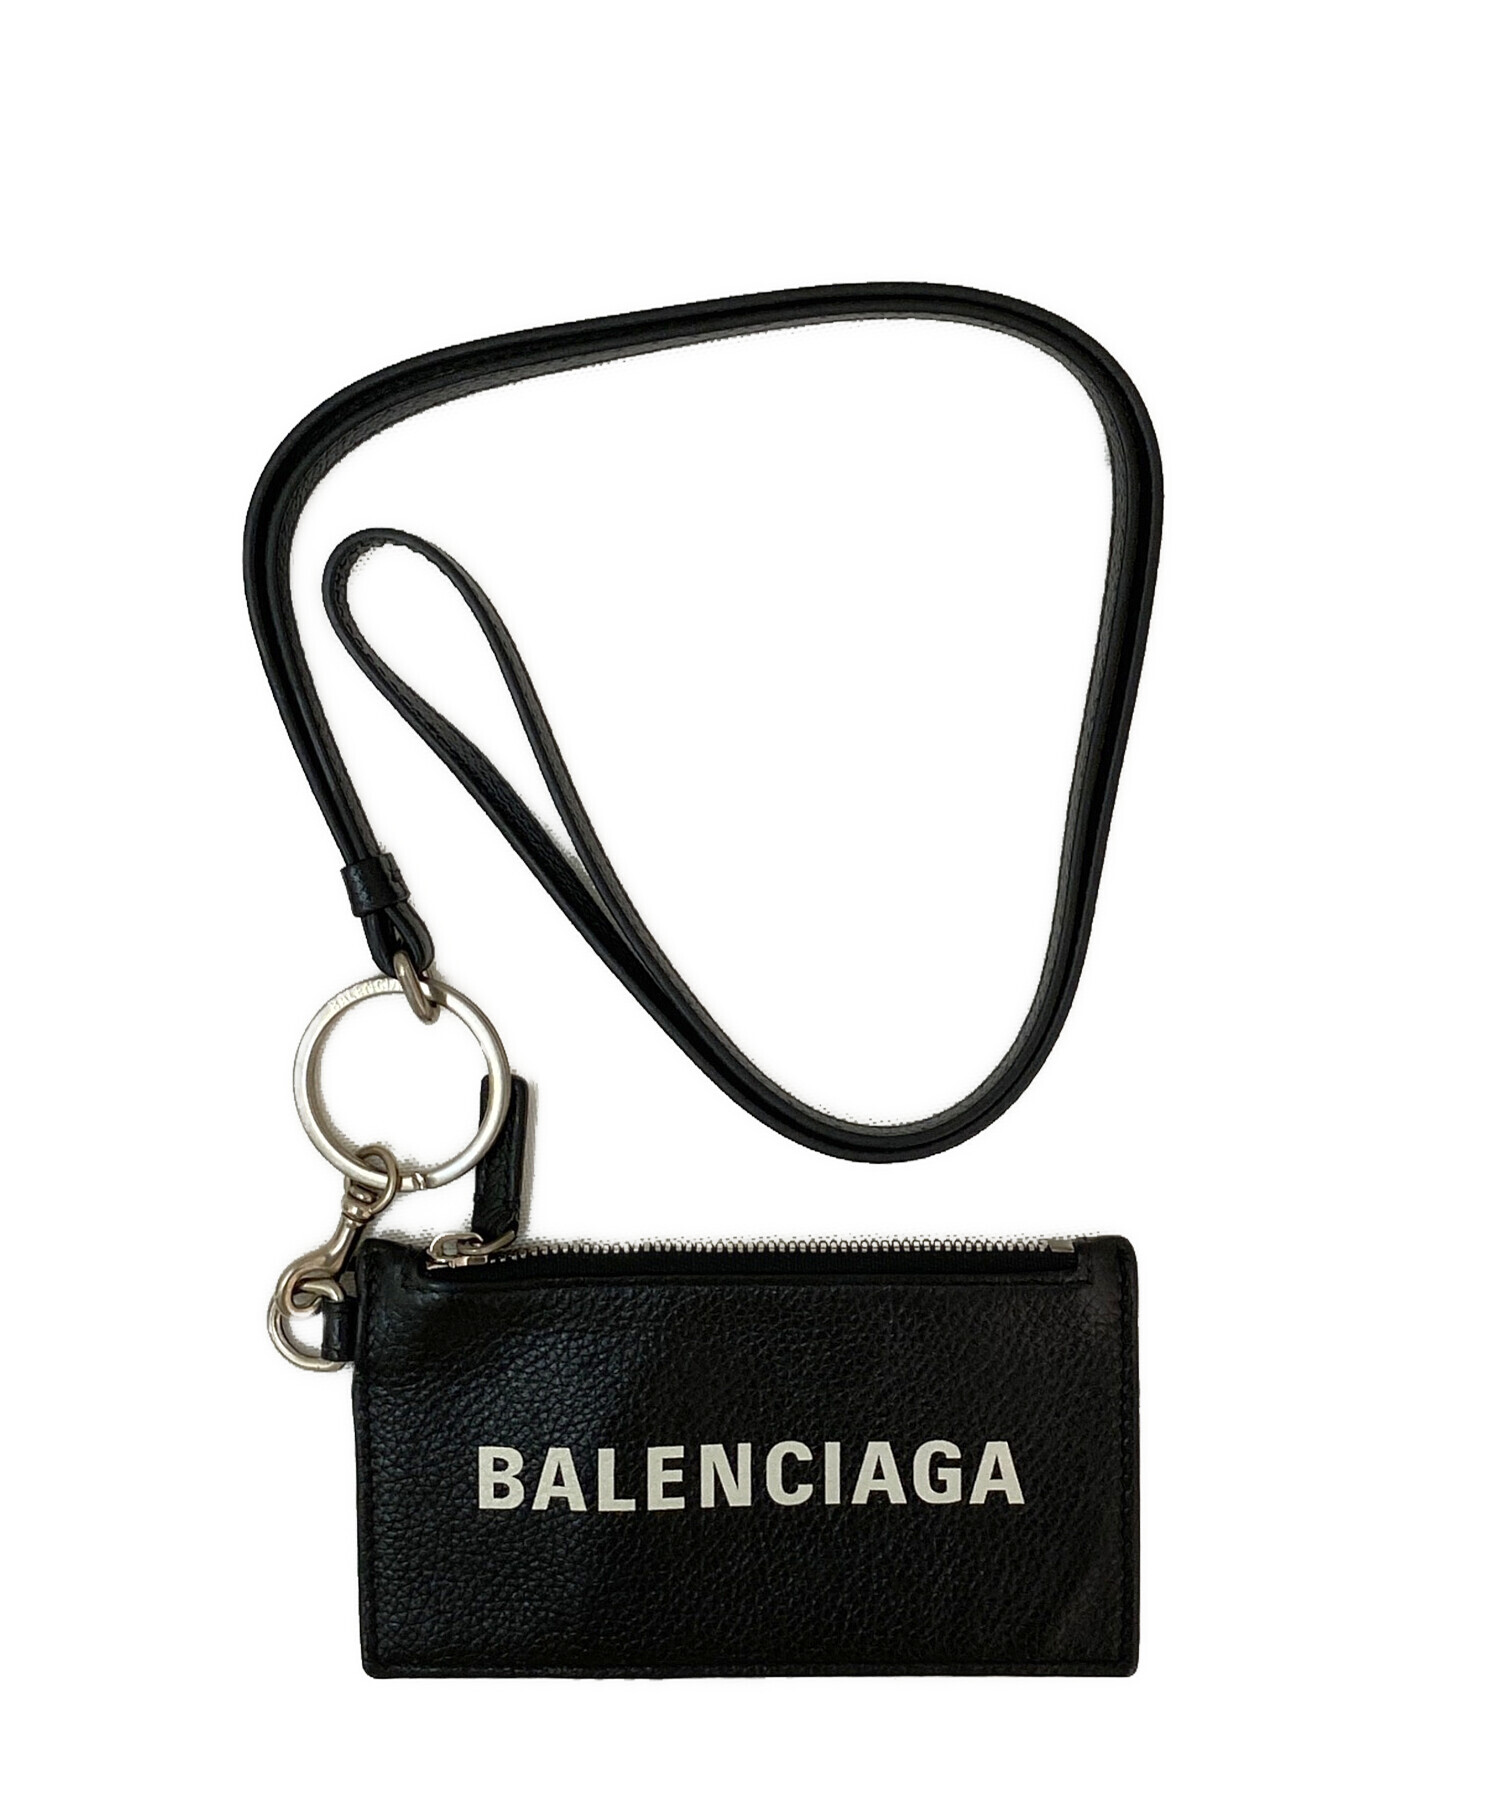 BALENCIAGA (バレンシアガ) ストラップ付カードケース ブラック